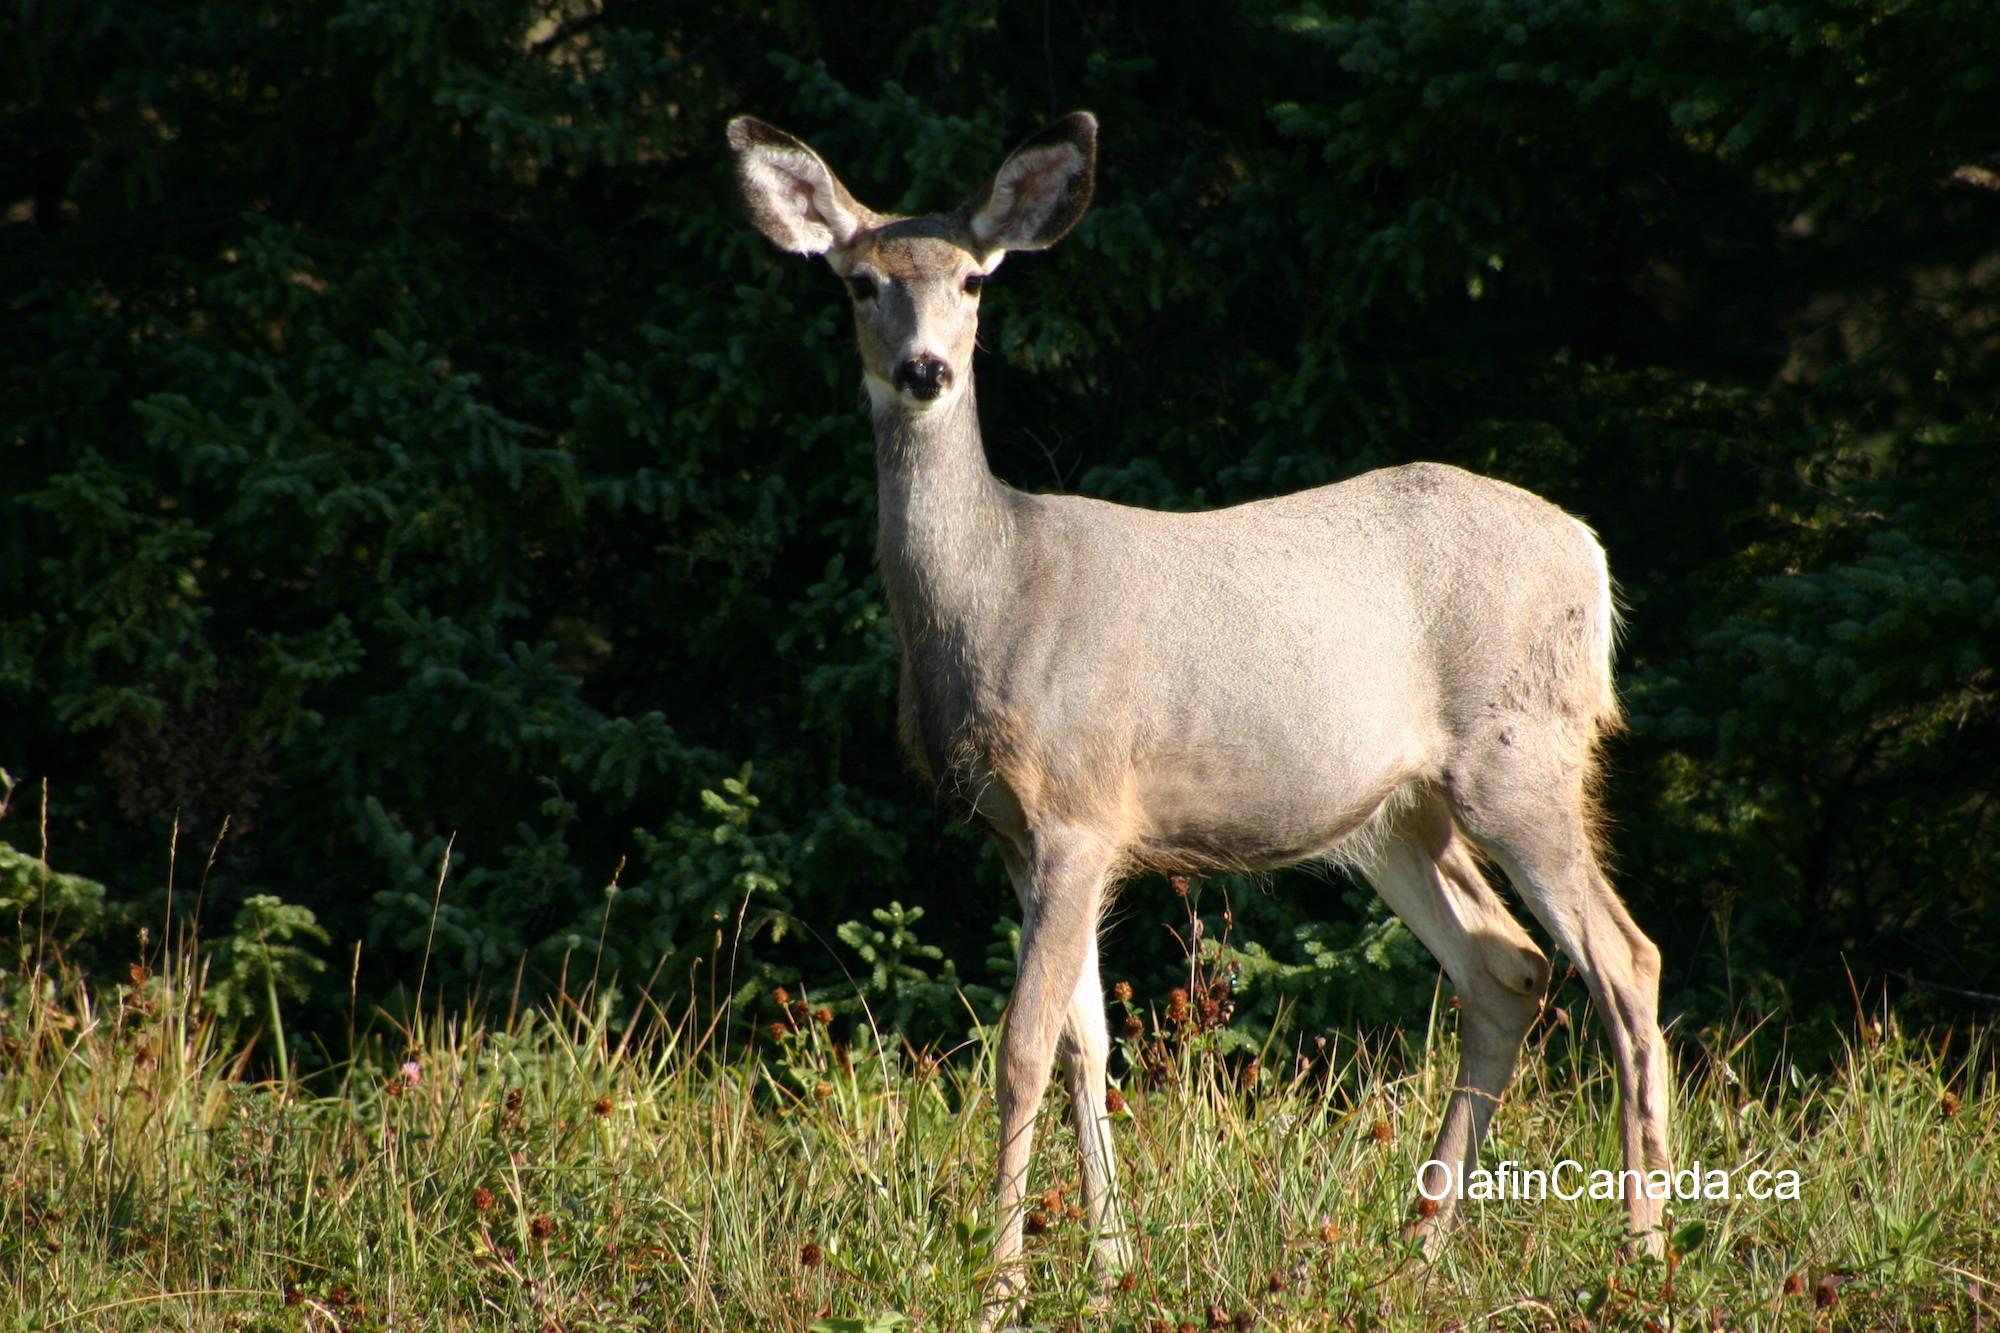 White tail deer on alert #olafincanada #britishcolumbia #discoverbc #wildlife #deer